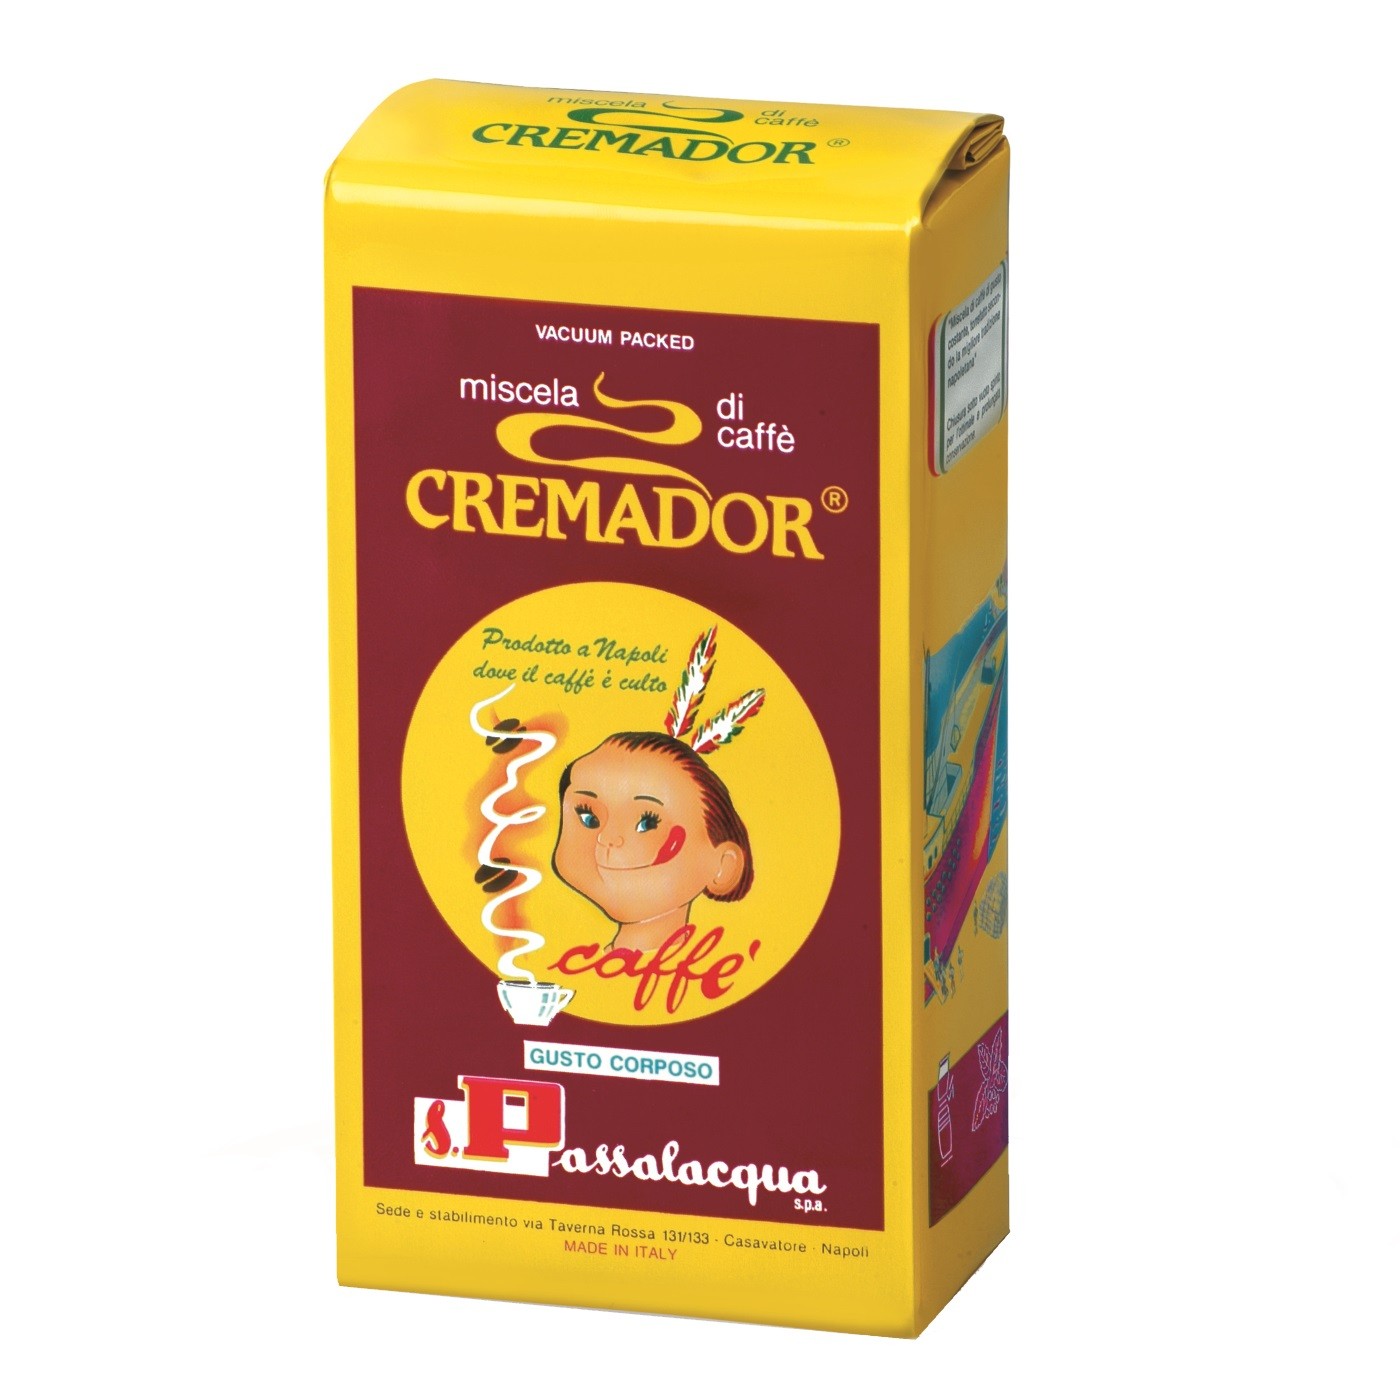 Passalacqua Cremador, gemahlen